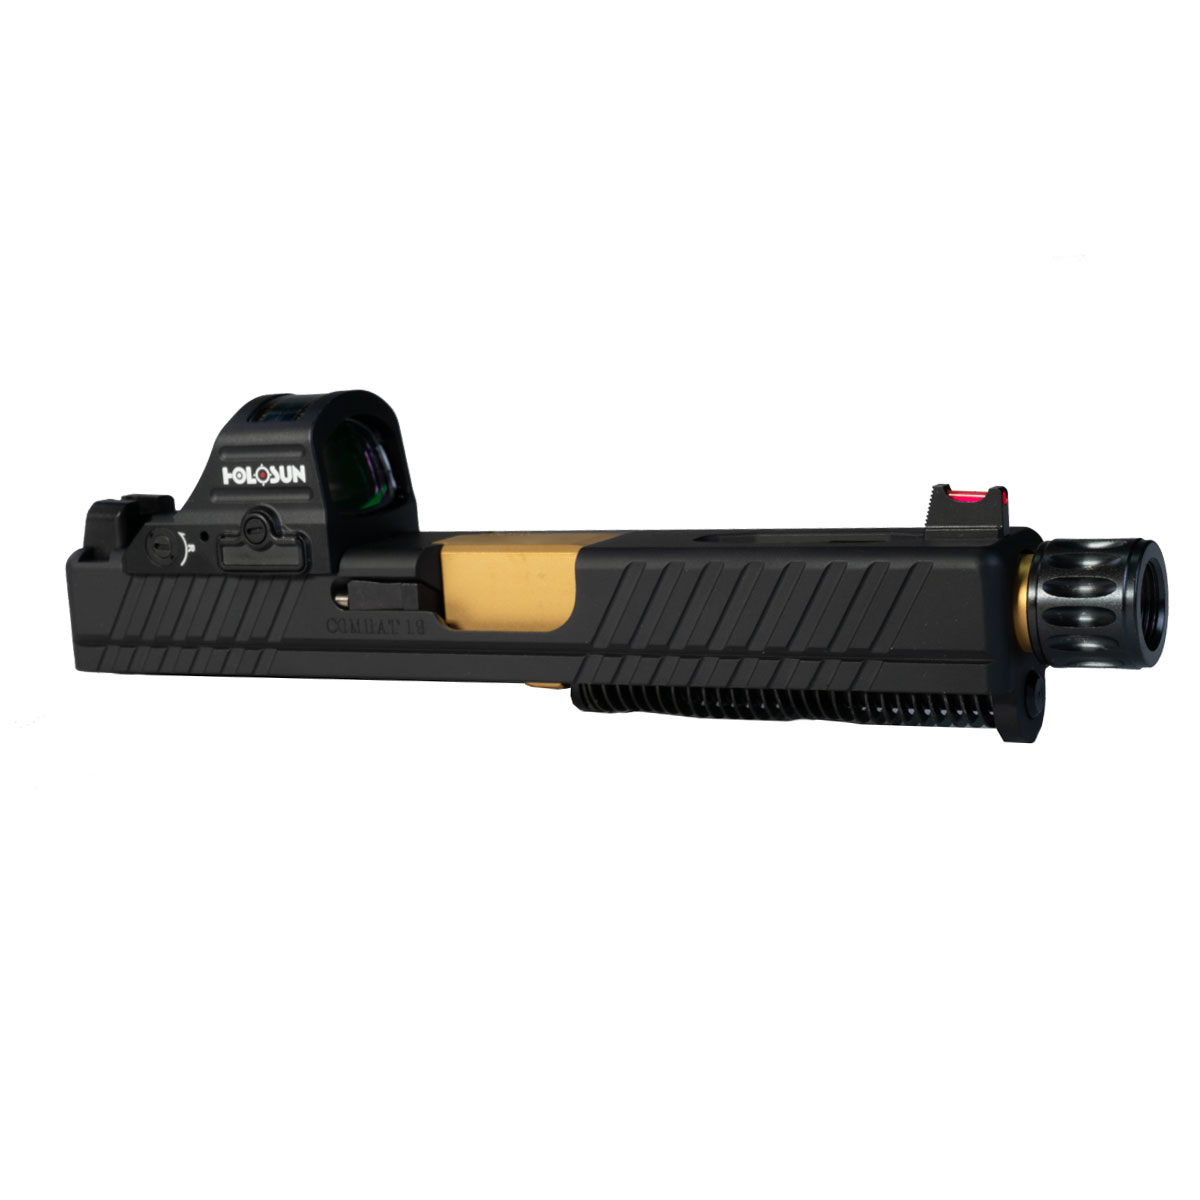 DDS 'Pax Vobiscum w/ HS507C-X2 Red Dot' 9mm Complete Slide Kit - Glock 19 Gen 1-3 Compatible